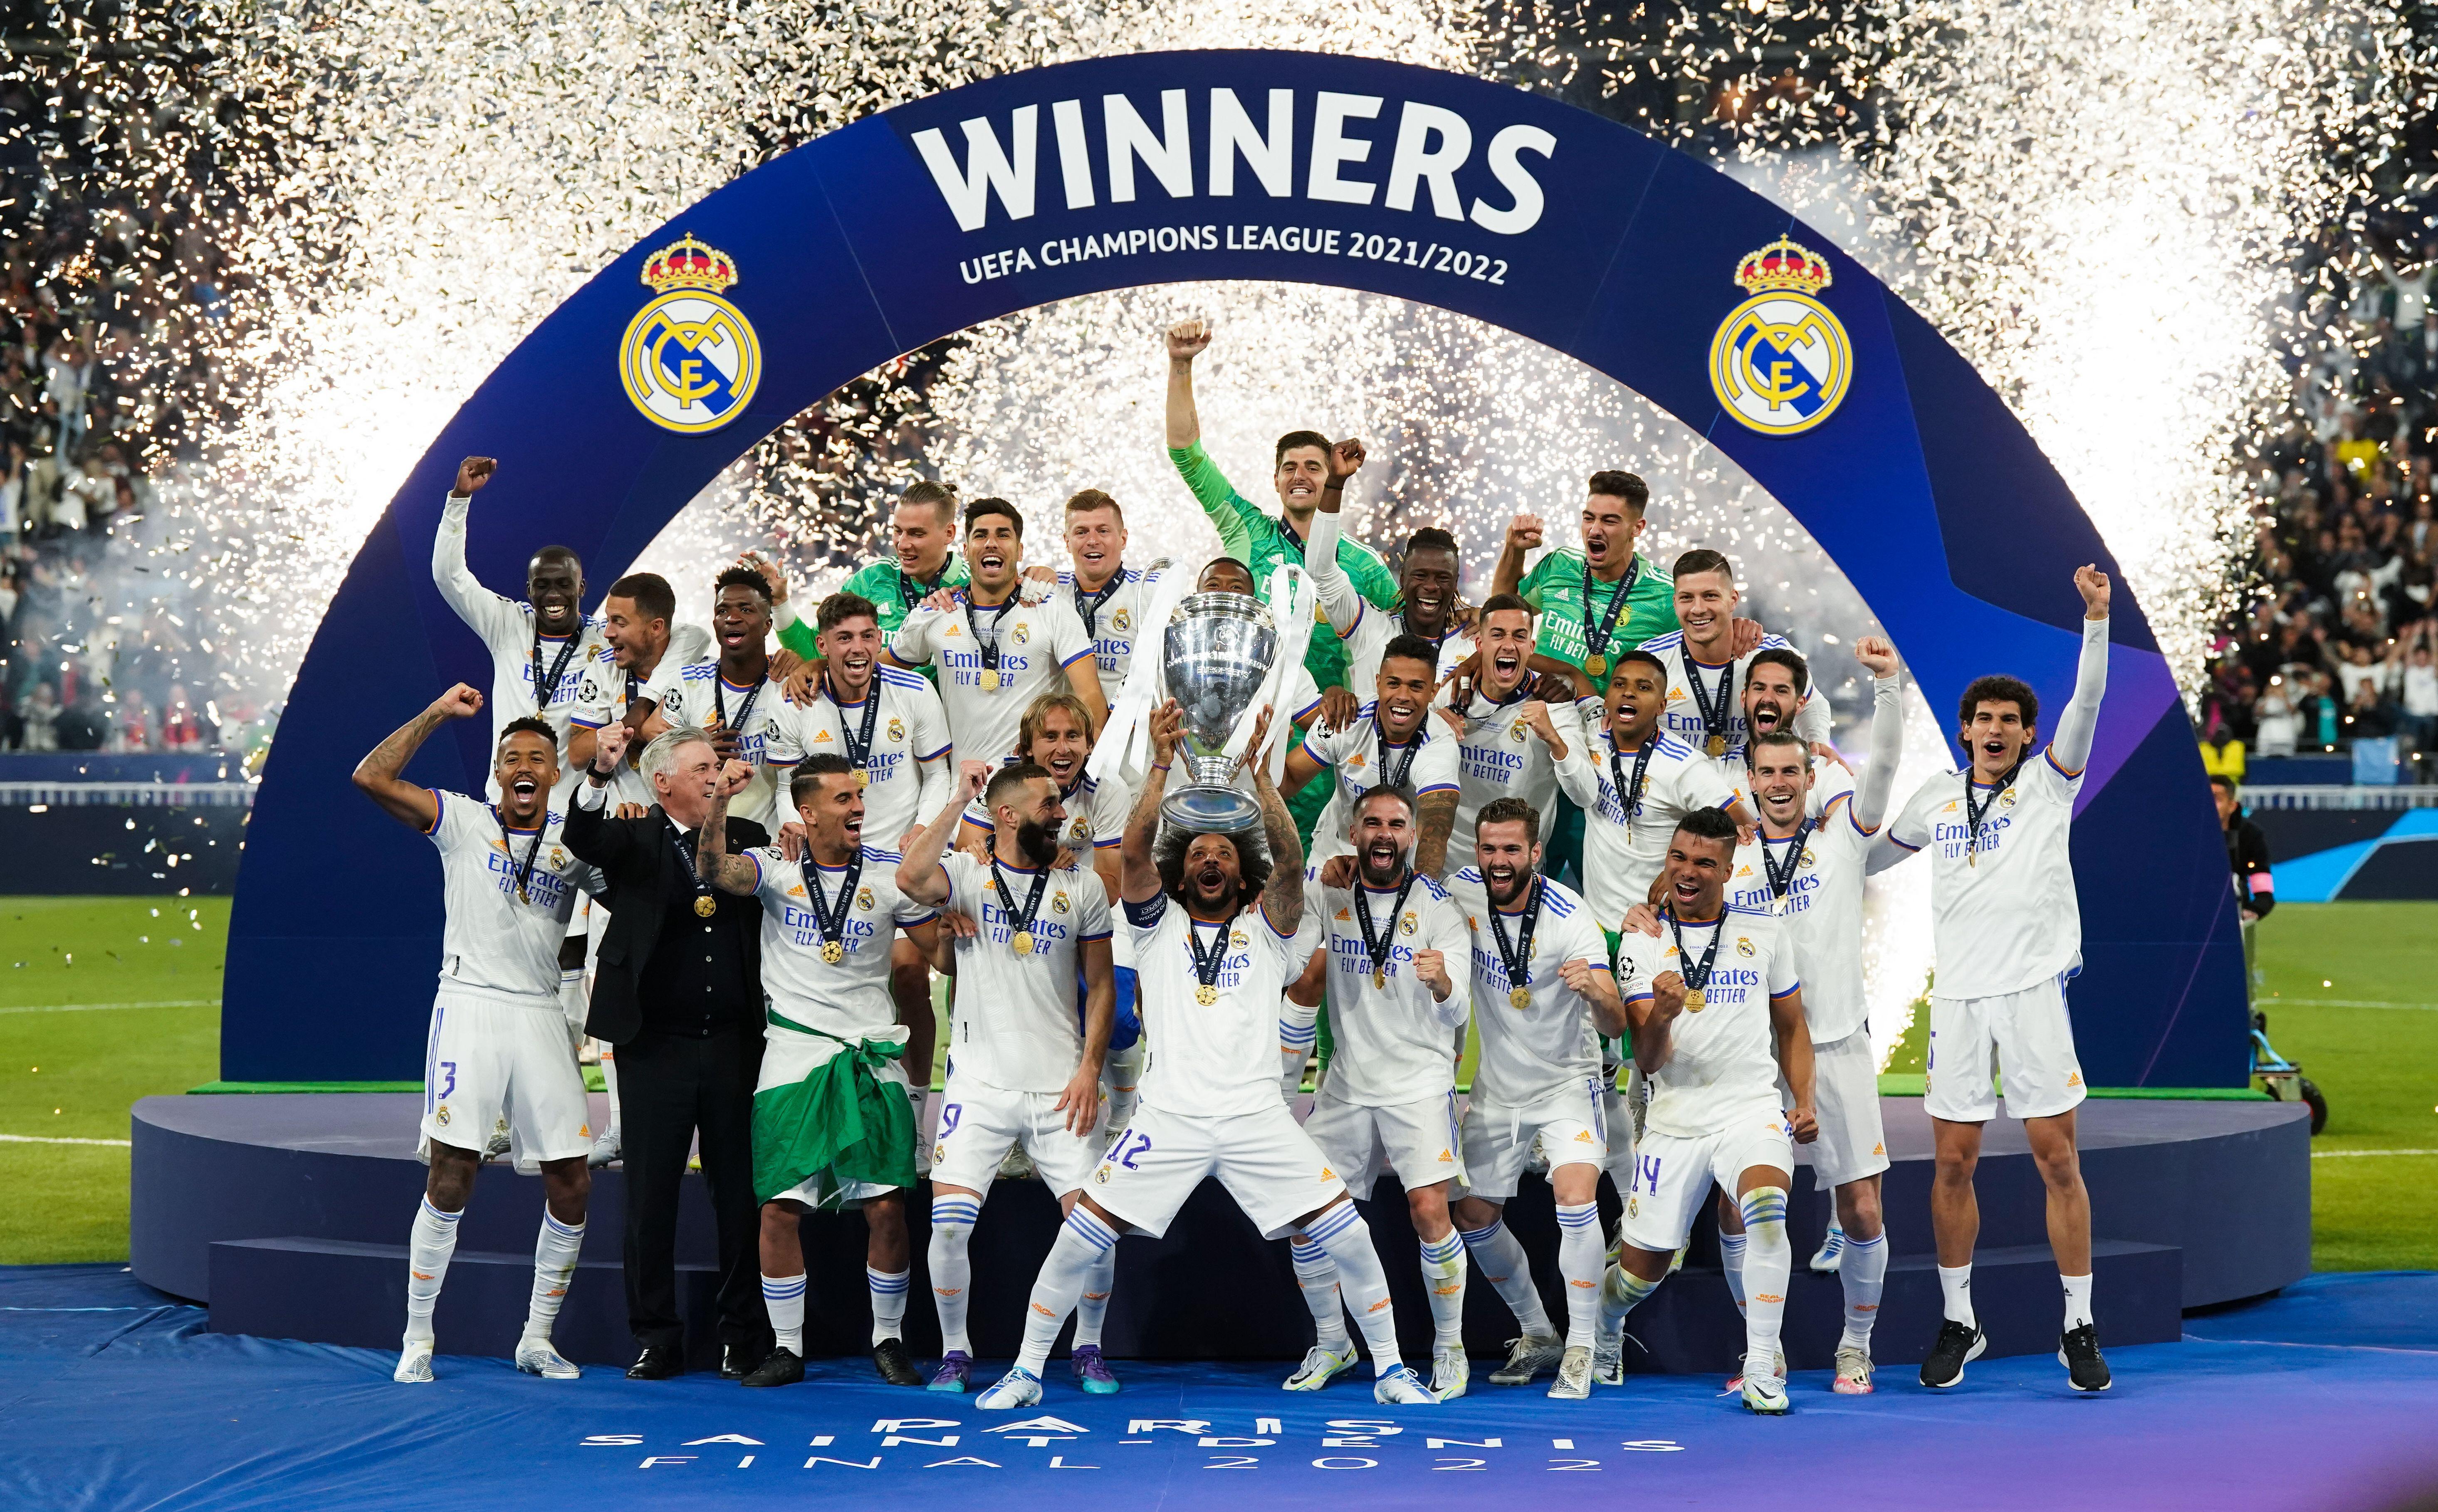 Real Madrid, Champions League winners 2022